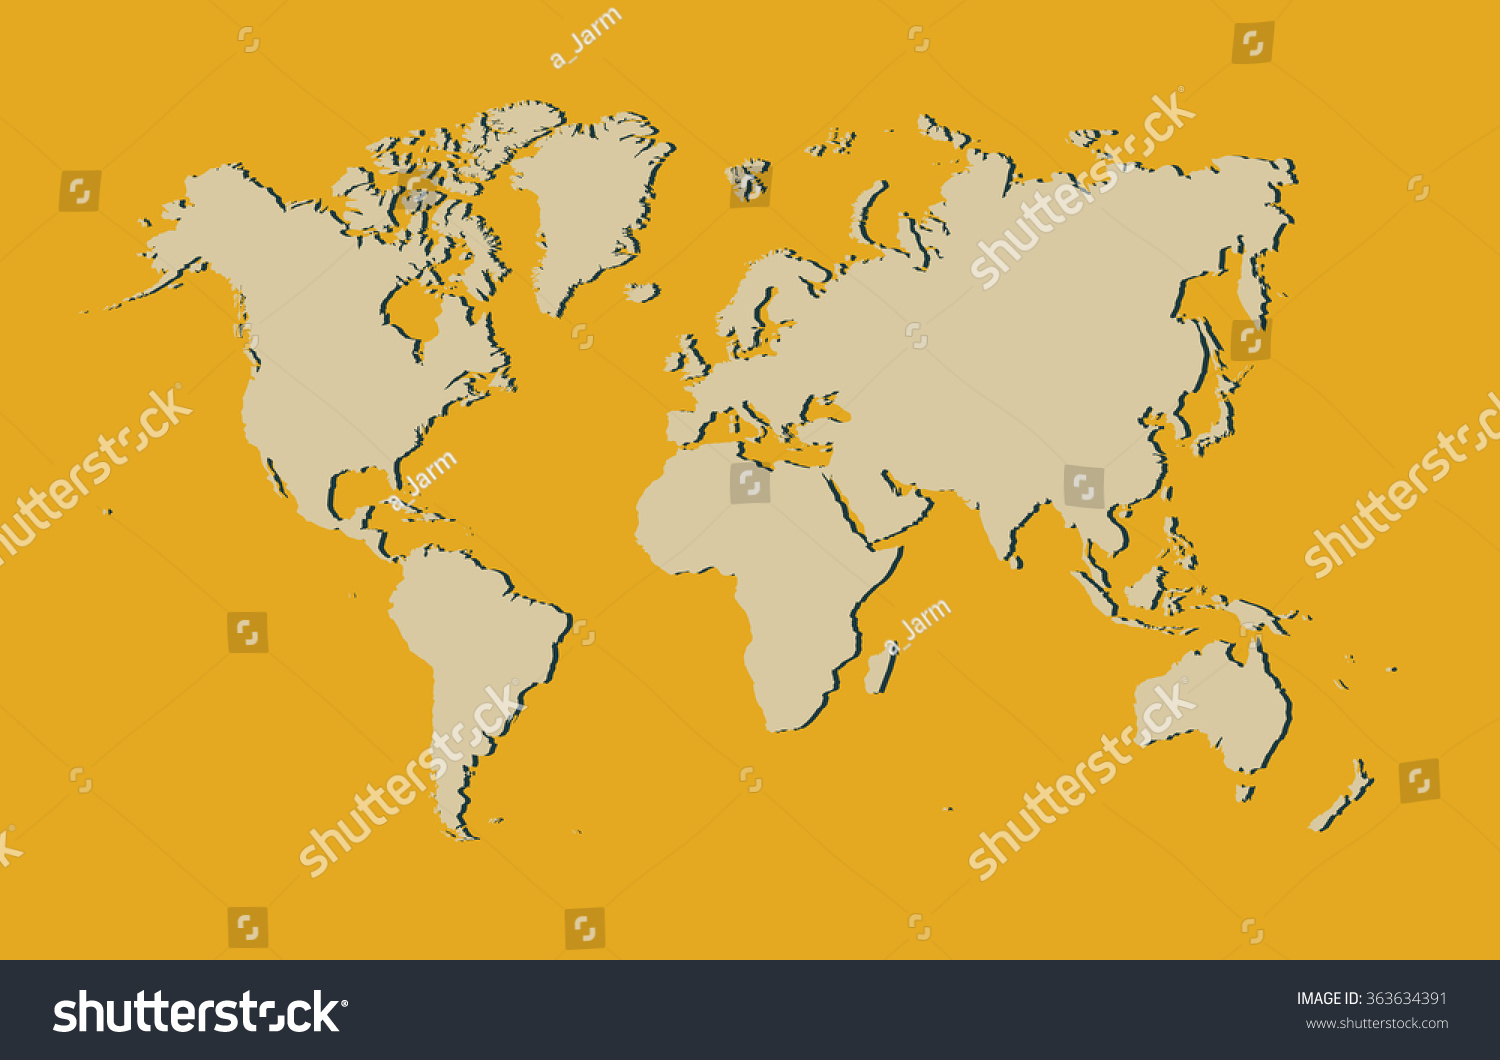 World Map Vector Illustration Royalty Free Stock Vector 363634391 